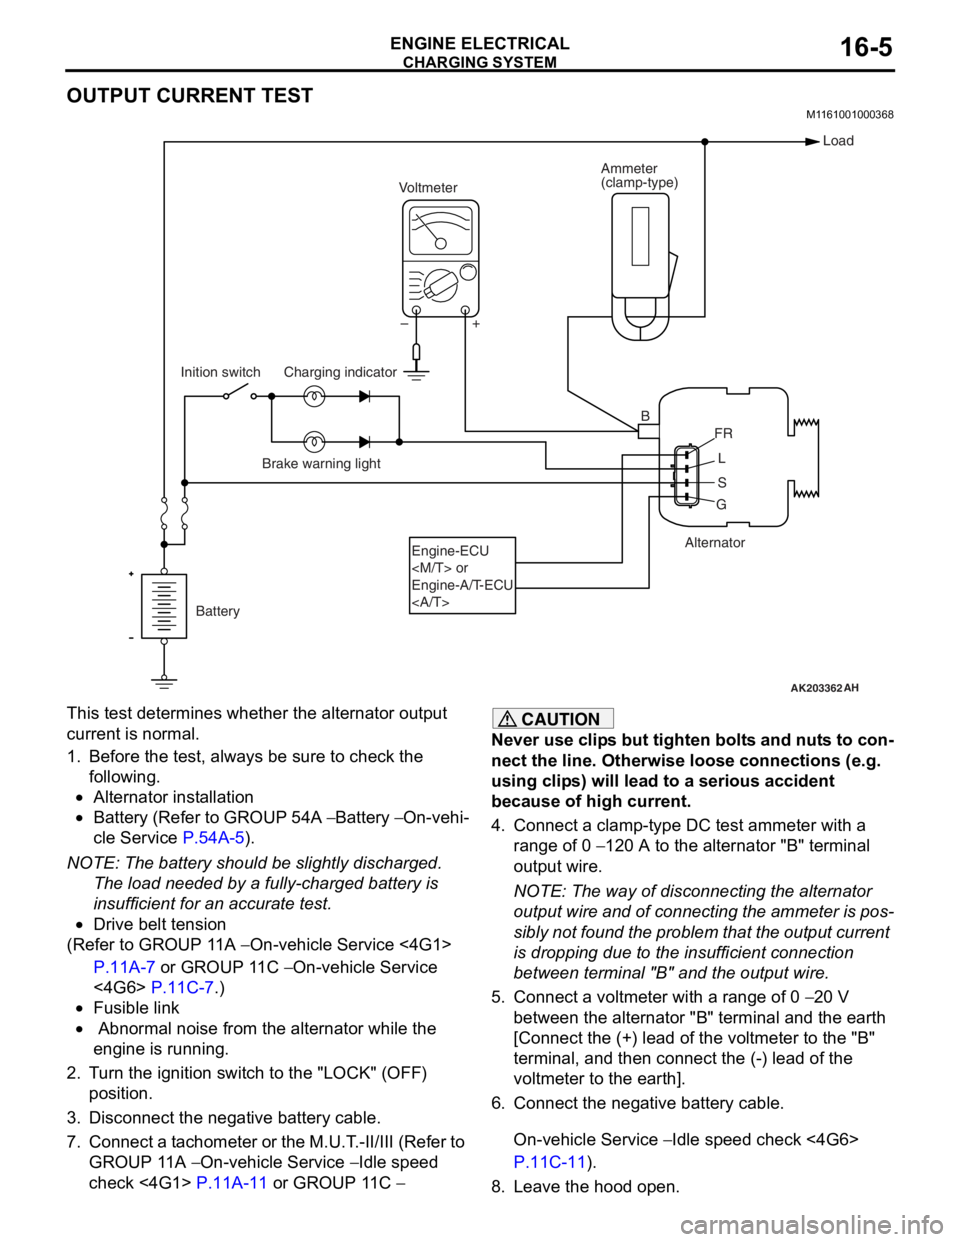 MITSUBISHI LANCER 2006  Workshop Manual 
CHARGING SYSTEM
ENGINE ELECTRICAL16-5
OUTPUT CURRENT TEST
M1161001000368
AK203362
Alternator
Ammeter
(clamp-type)
Voltmeter
Battery
Inition switch
Engine-ECU
<M/T> or
Engine-A/T-ECU
<A/T> Load
B FR
L